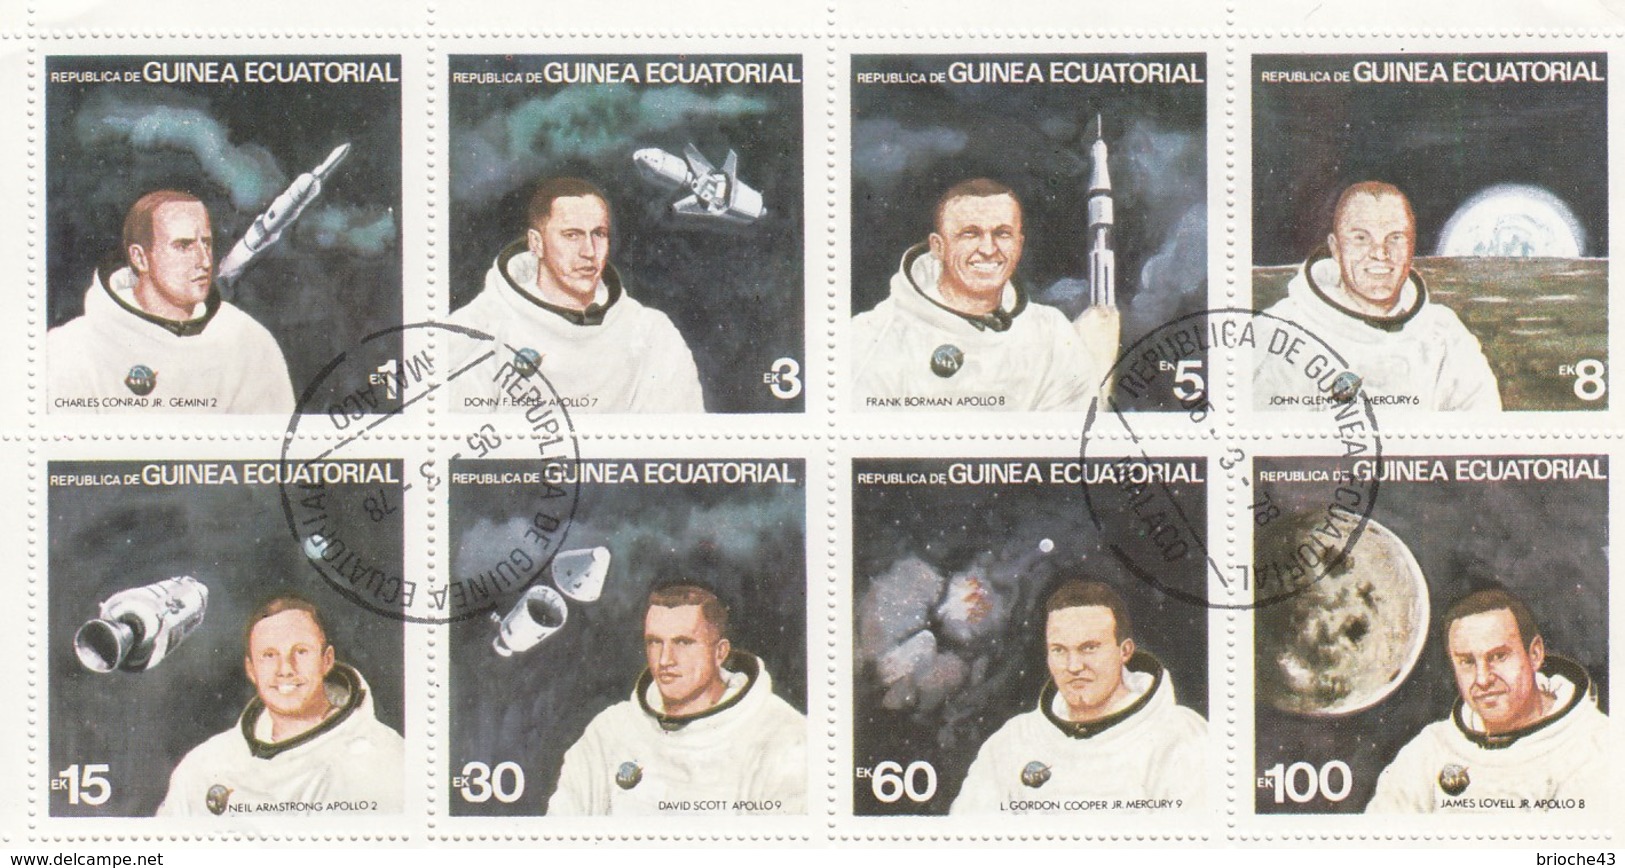 REPUBLICA DE GUINEA EQUATORIAL   - FEUILLET 8 TIMBRES ESPACE ASTRONAUTES   - 25.3.78  / 6244 - Collections